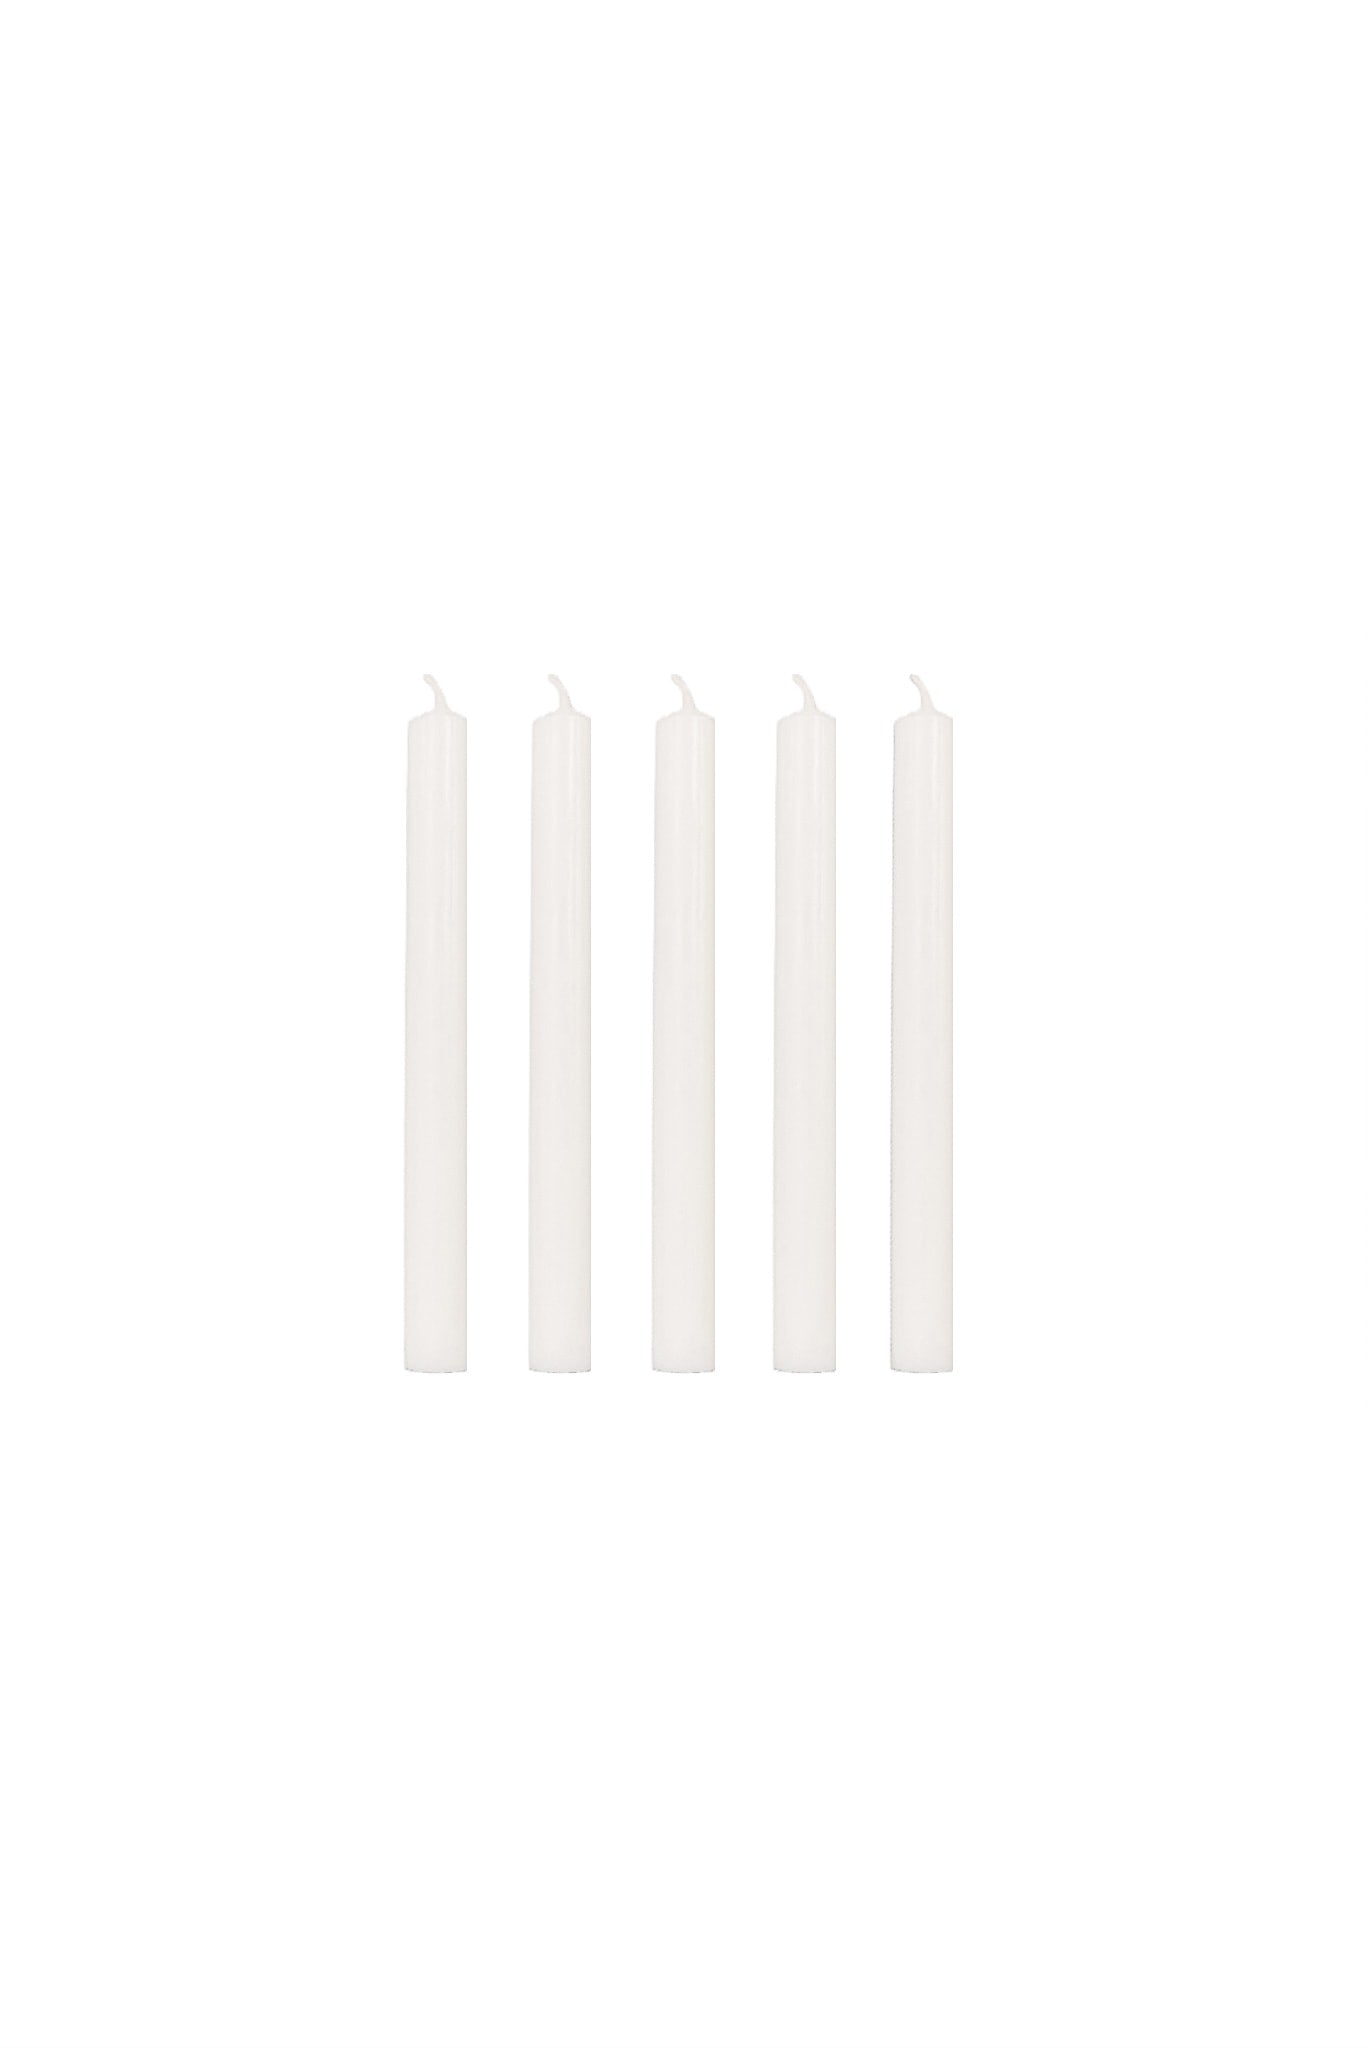 Italian Church Candles, Ø=1.3 cm x 13 cm, ca 320 pcs, 3 hours - White